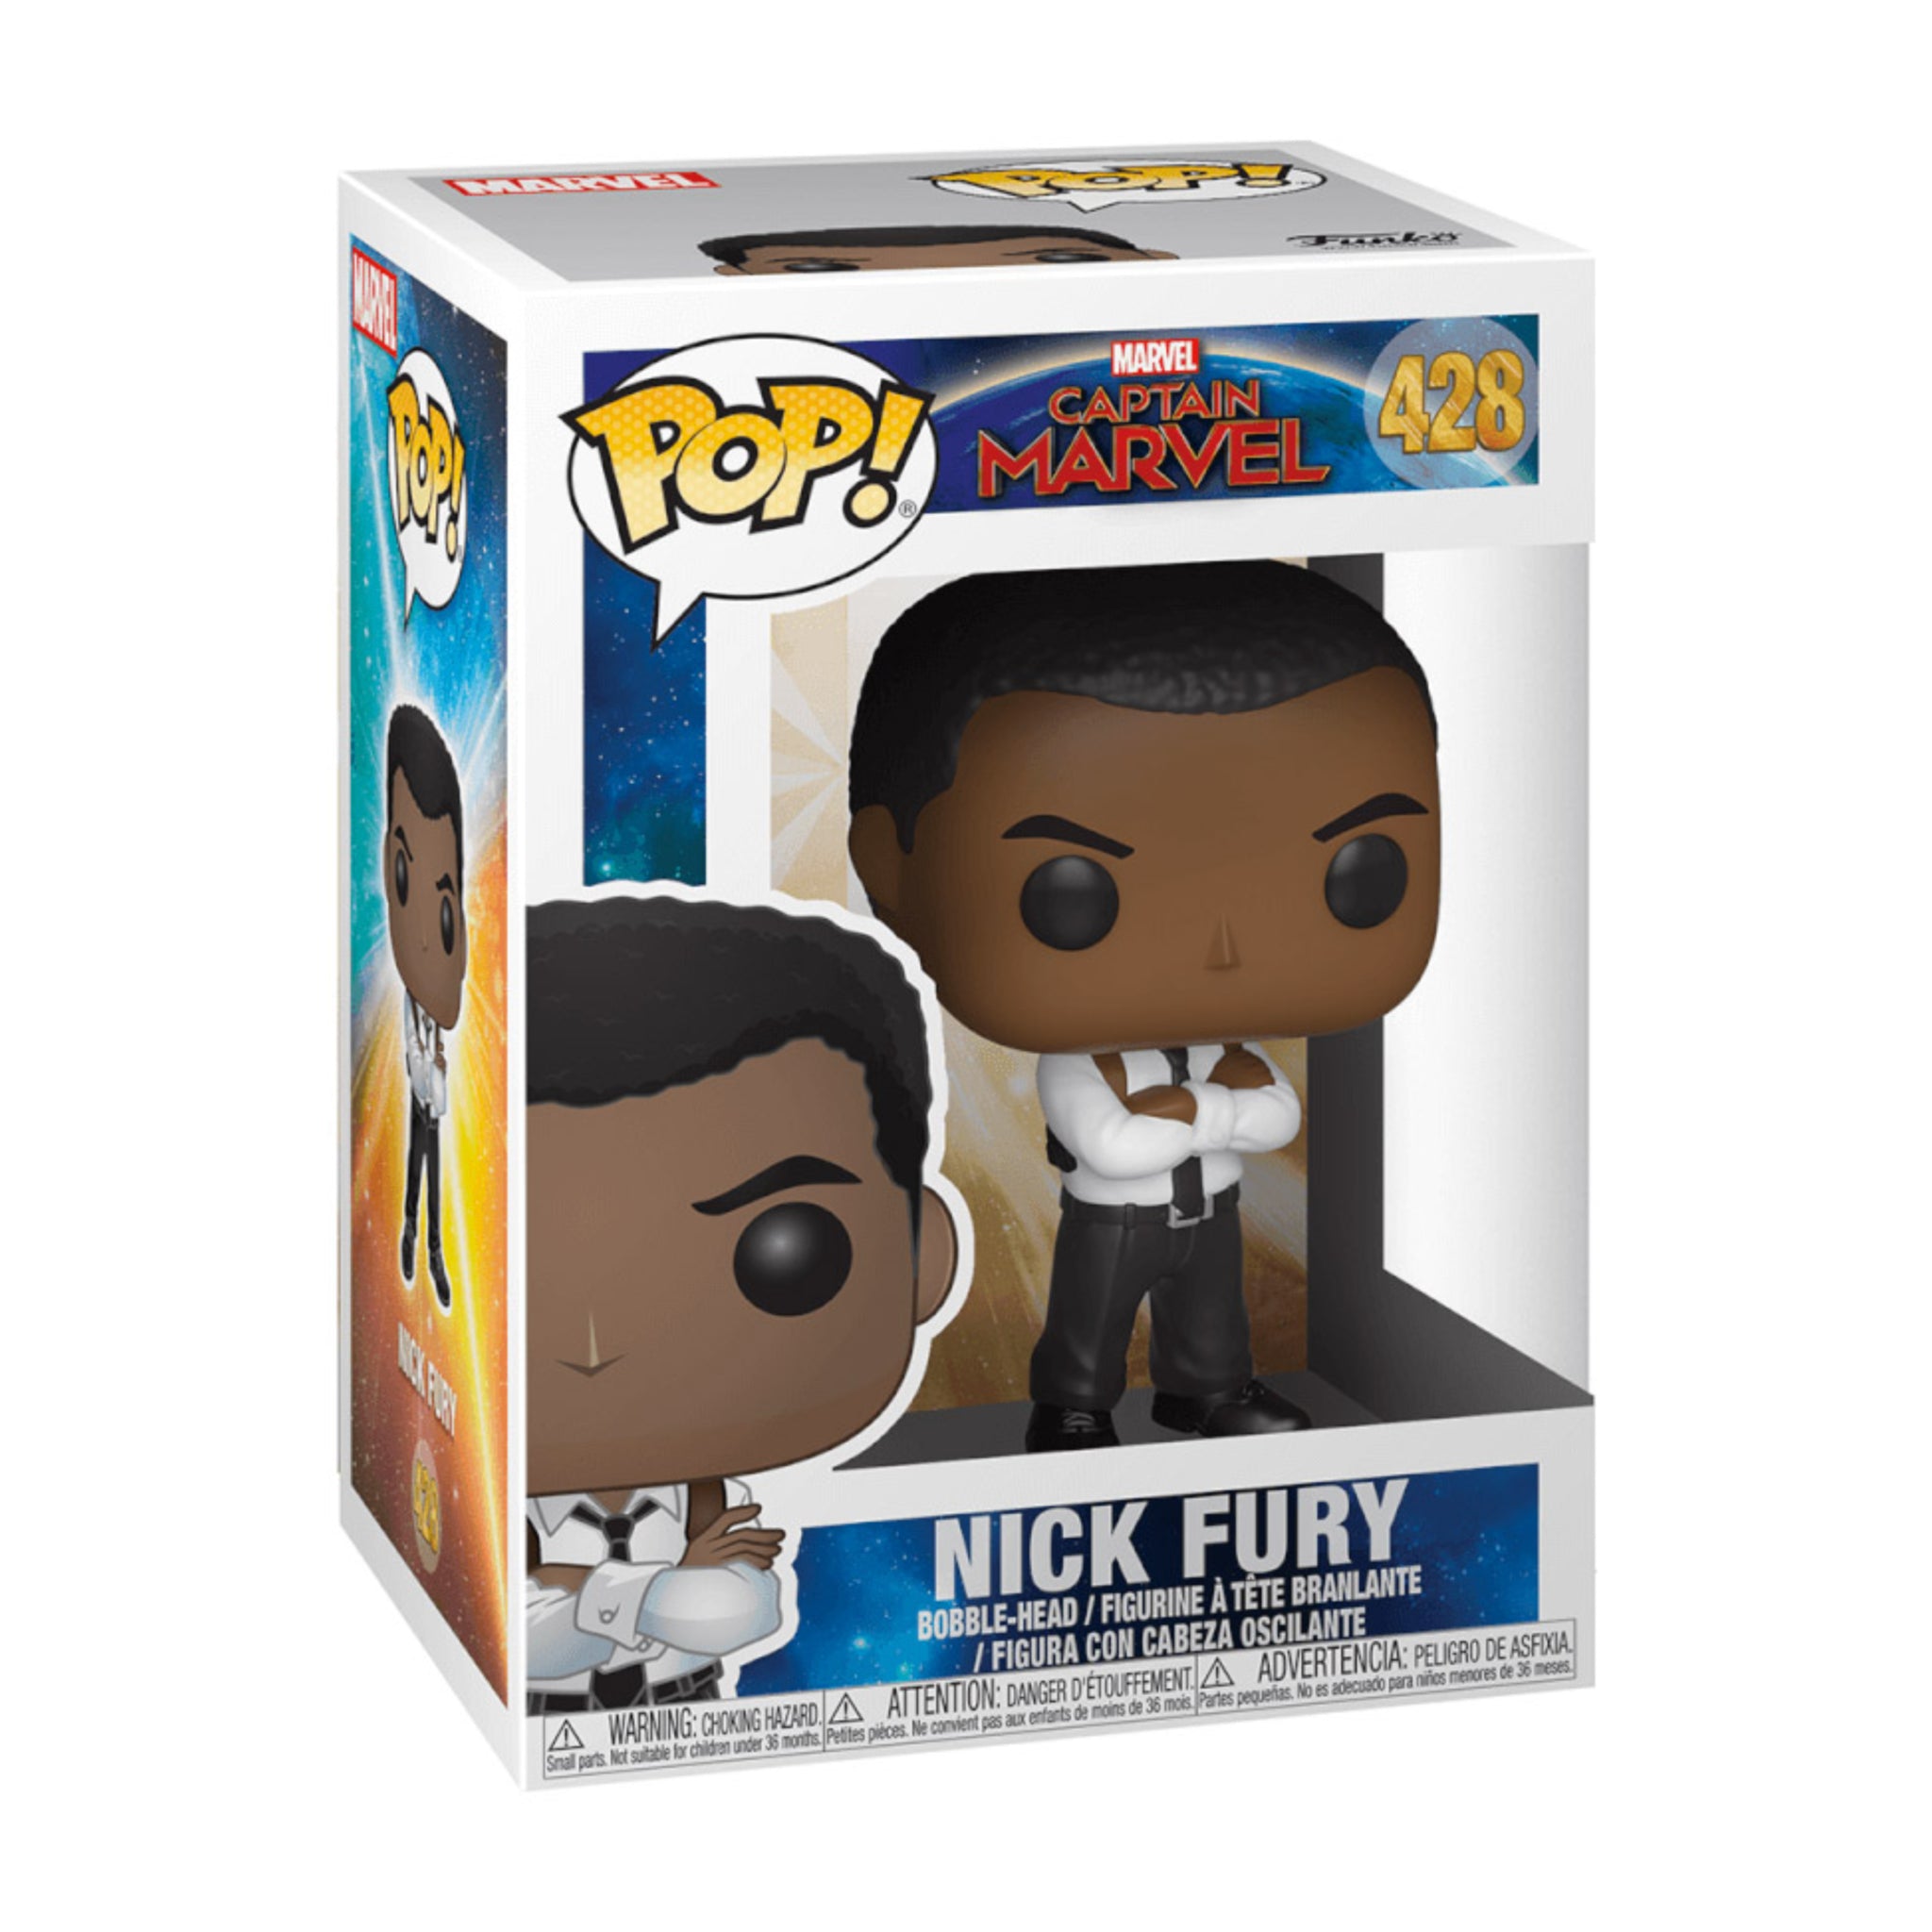 Nick Fury Funko Pop!